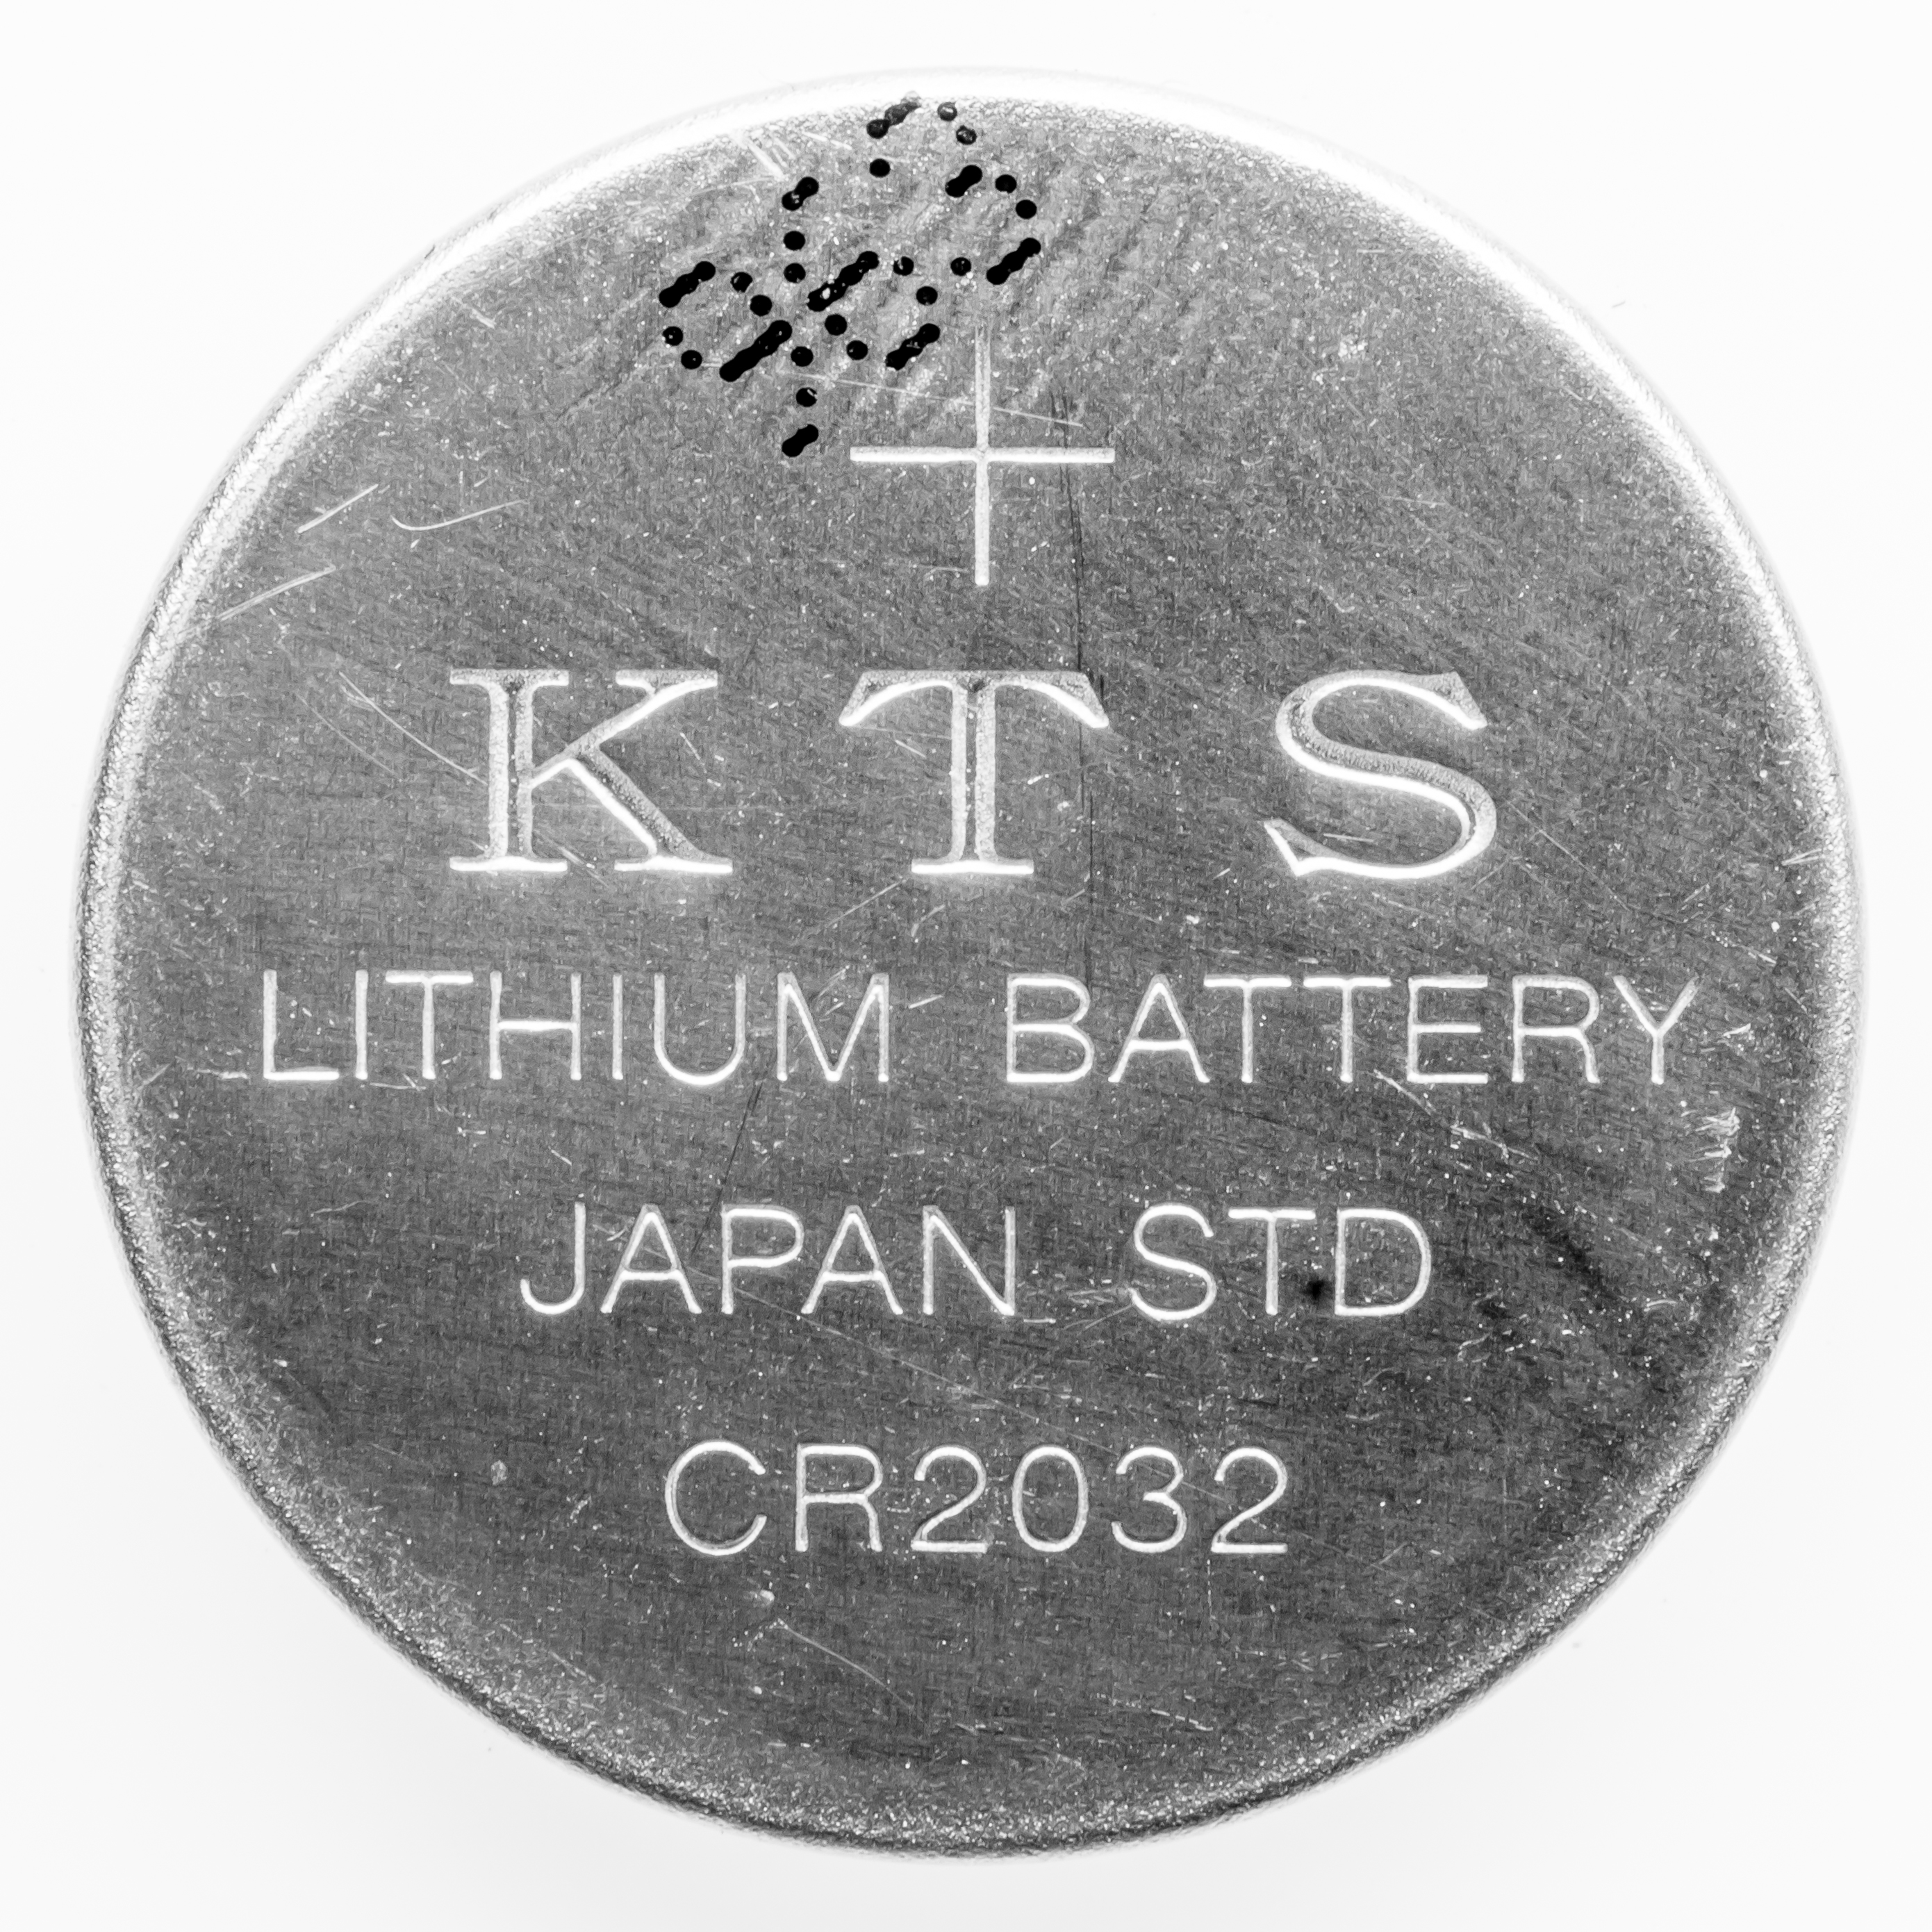 Cr2032 batteries. KTS cr2032. Литиум батарейка 2032. KTS Lithium Battery cr2032. Батарейка cr2032 Lithium Battery.